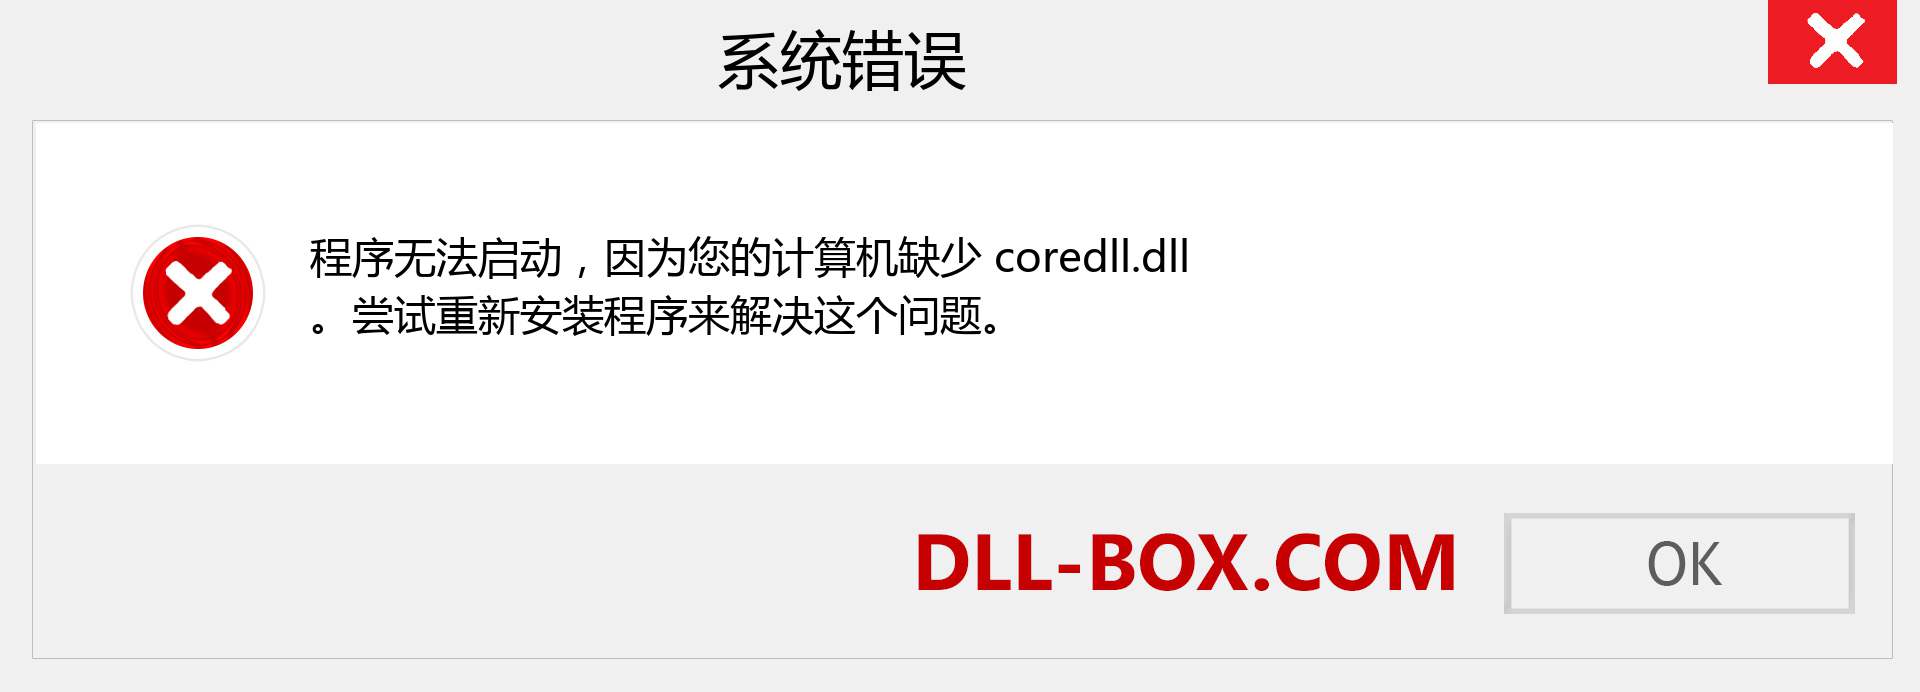 coredll.dll 文件丢失？。 适用于 Windows 7、8、10 的下载 - 修复 Windows、照片、图像上的 coredll dll 丢失错误